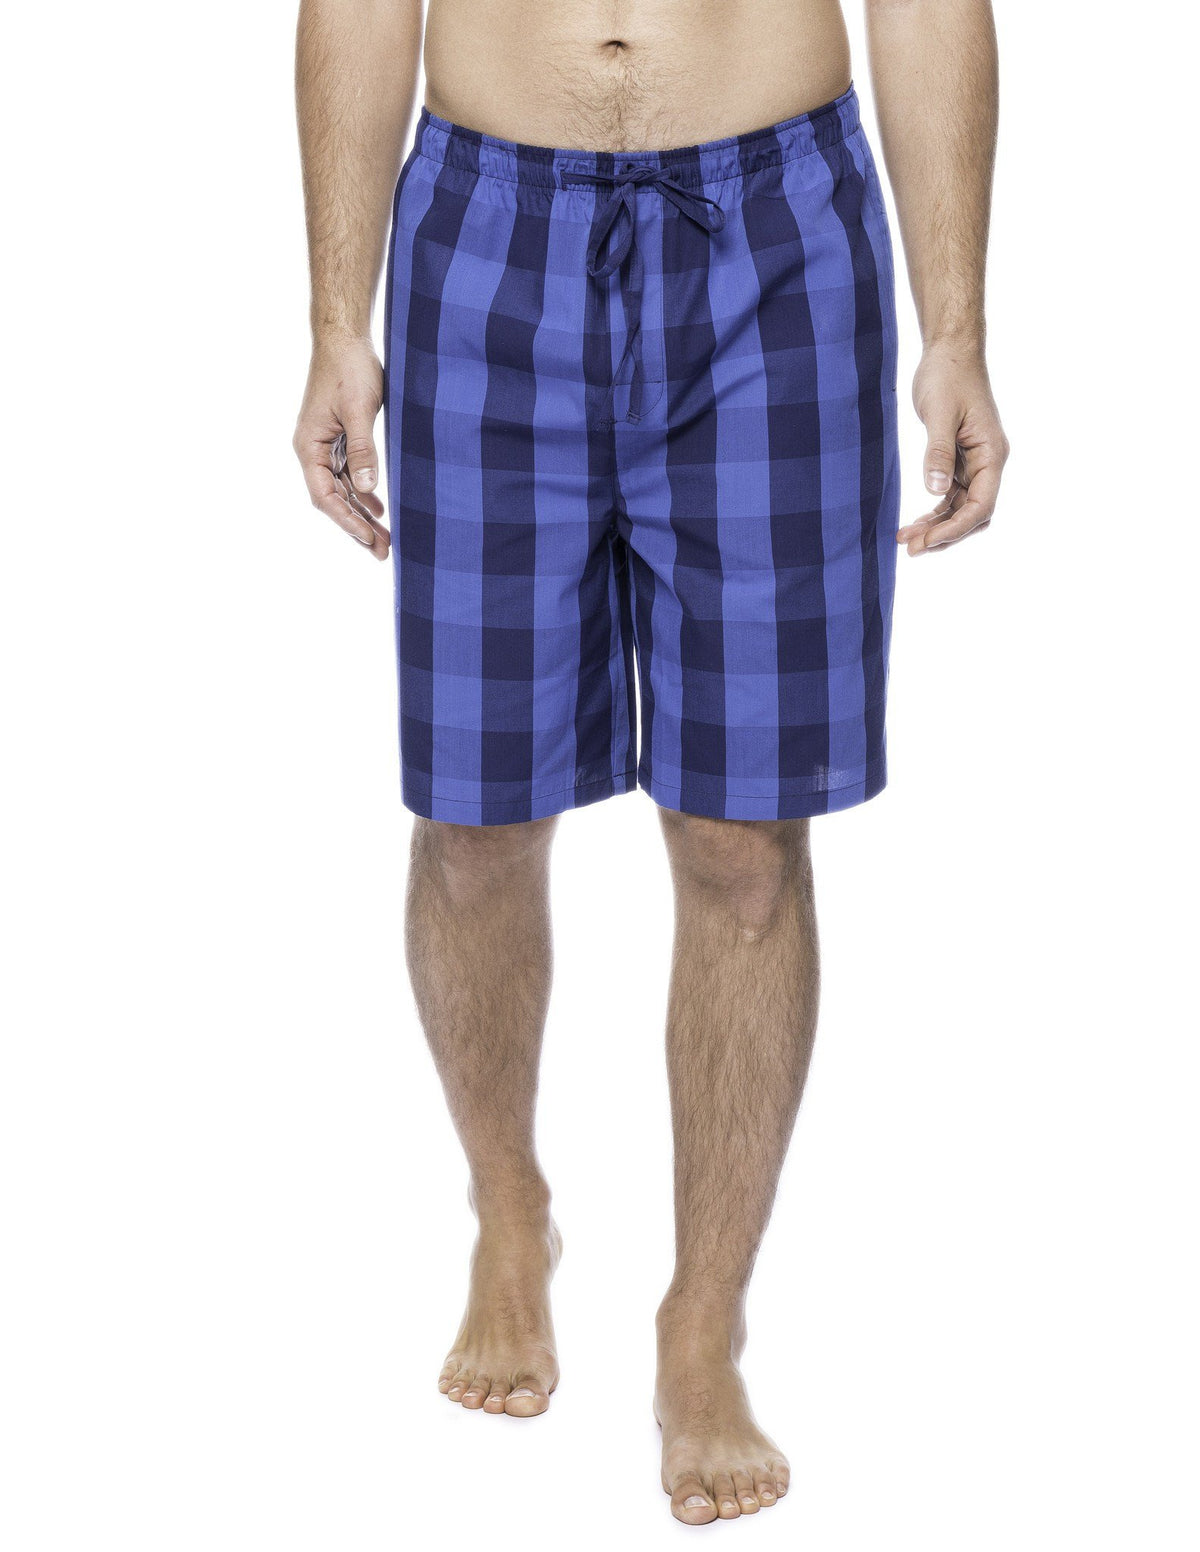 Men's 100% Woven Cotton Lounge Shorts - Gingham Navy/Blue